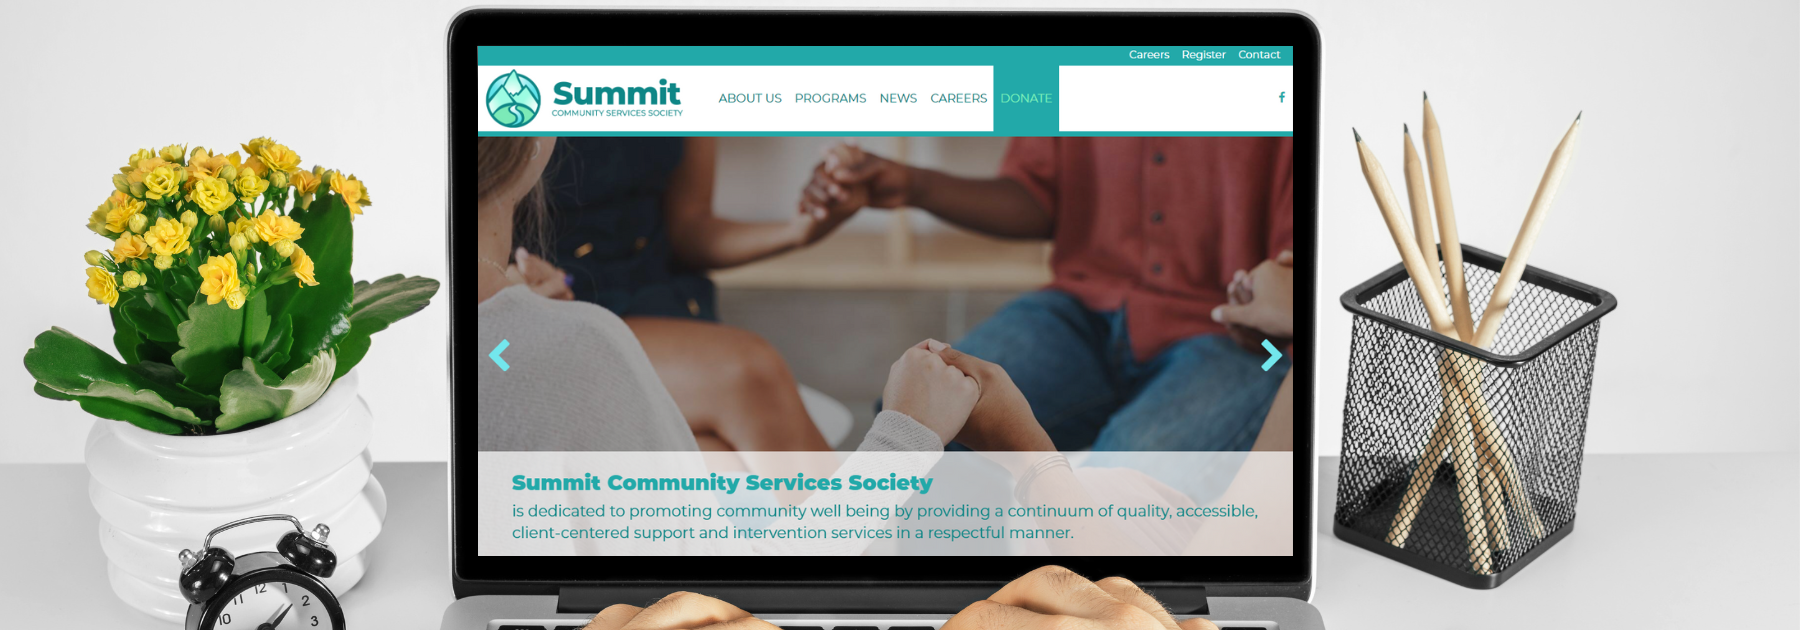 Summit Community Services Society